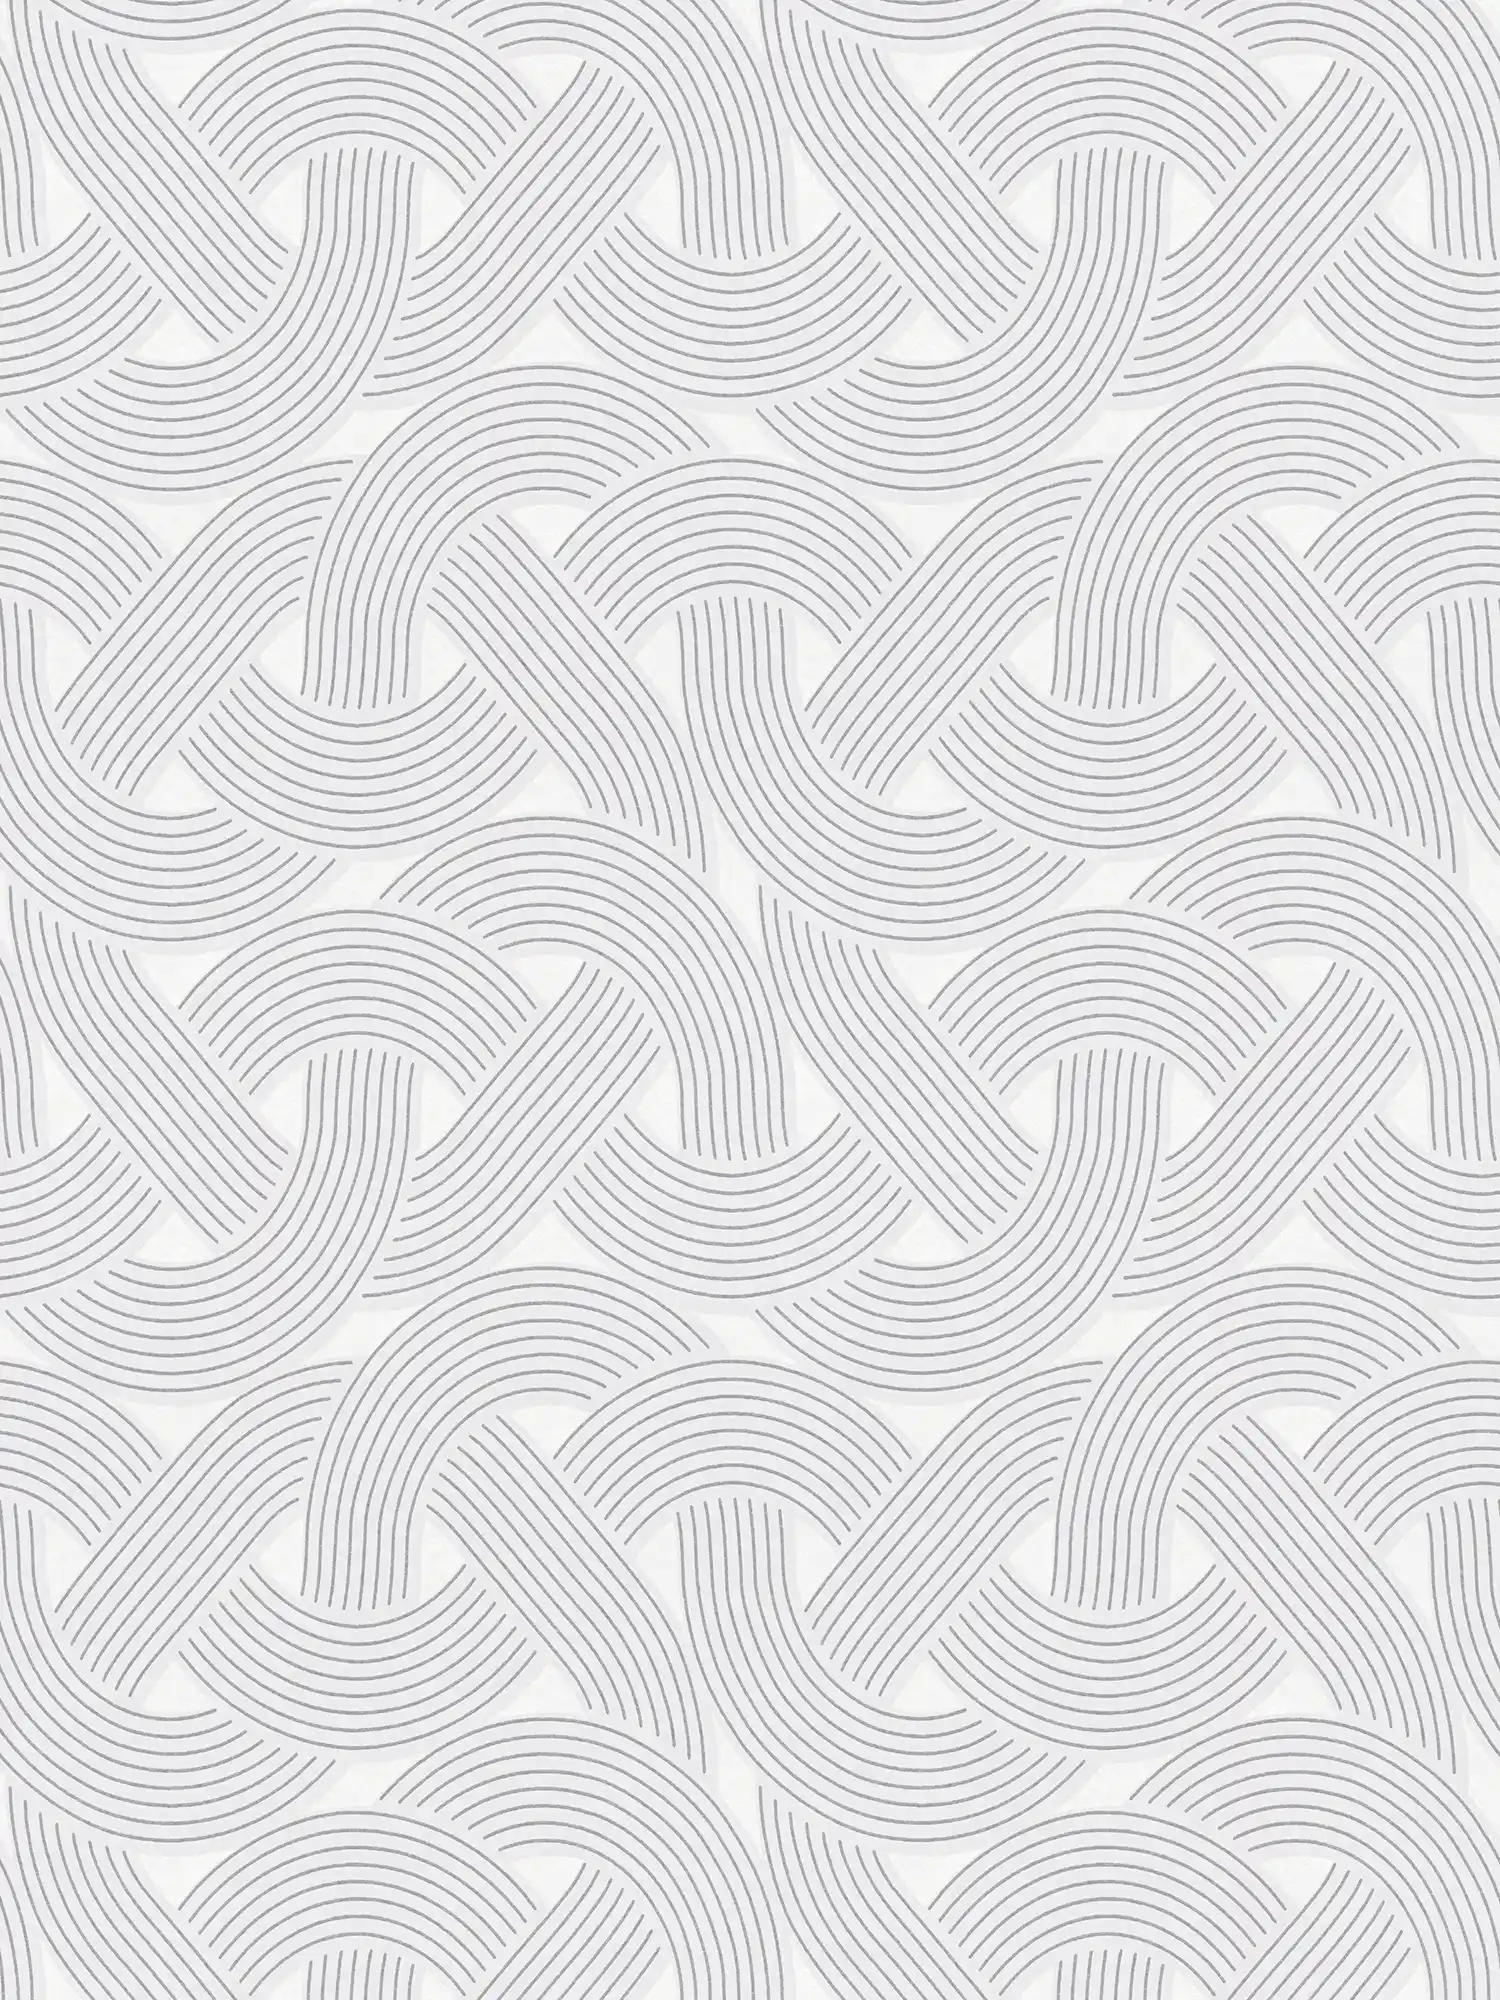         Non-woven wallpaper in graphic line pattern - grey, silver, white
    